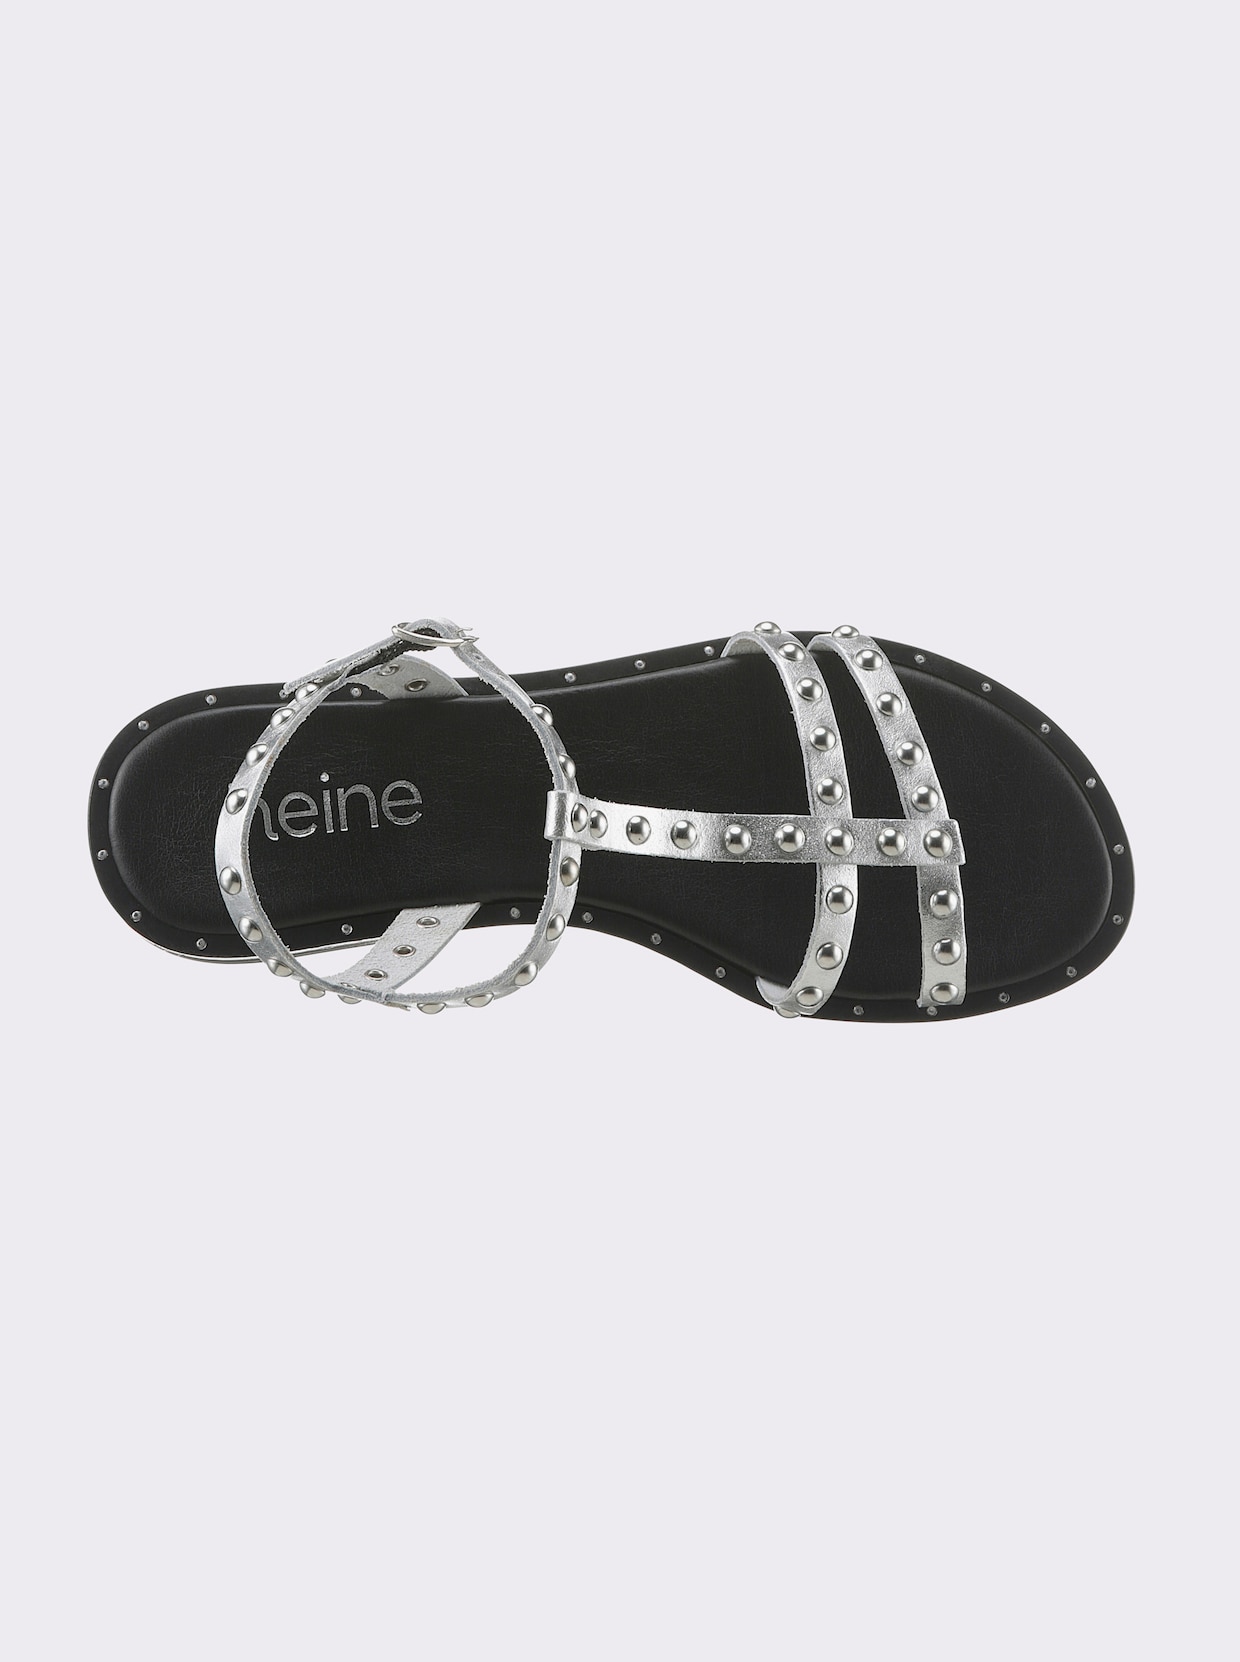 heine Sandalen - zilverkleur/zwart